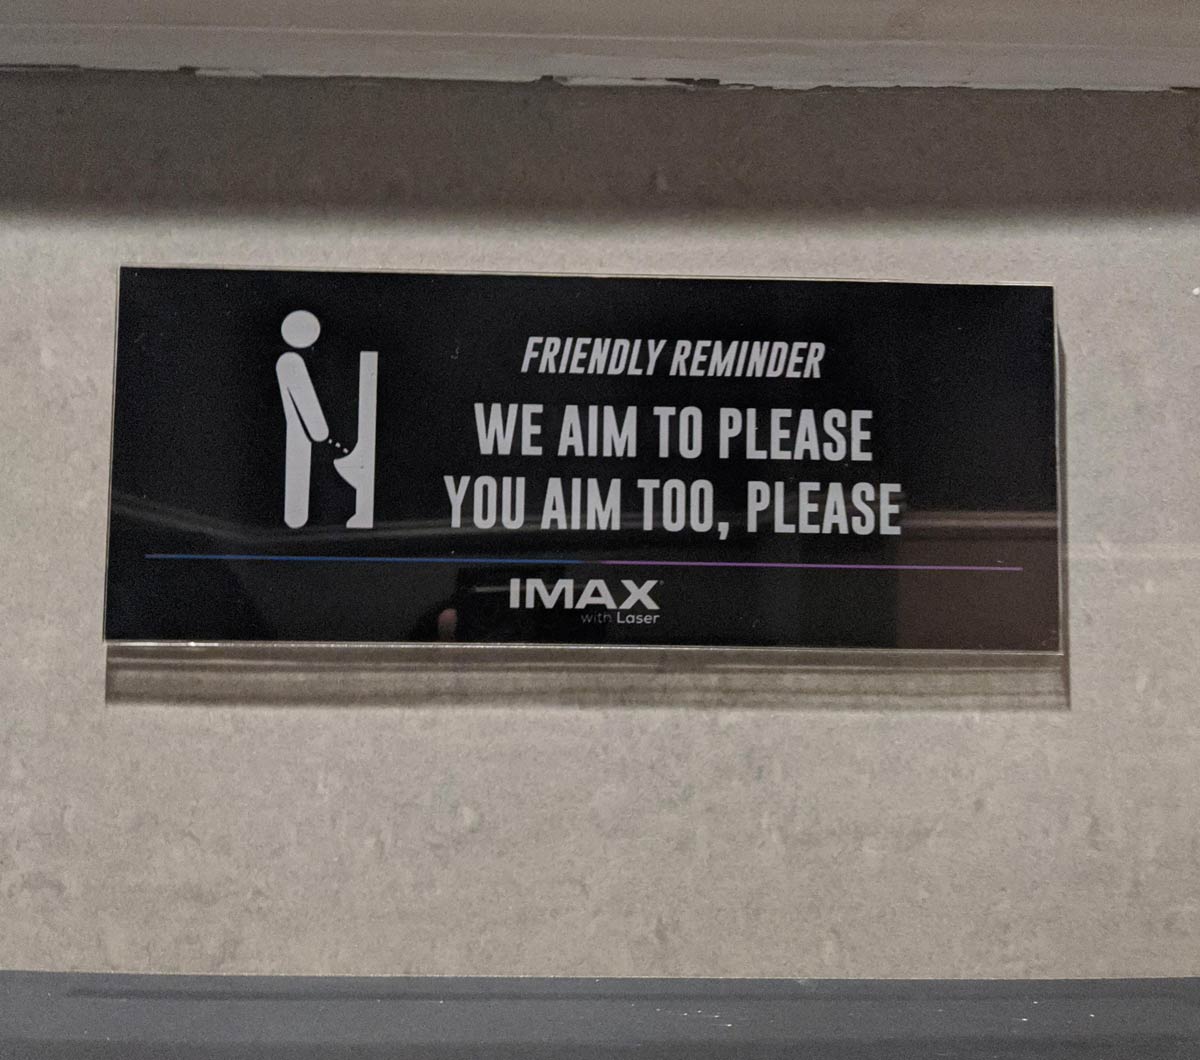 A sign at our local cinema's bathroom